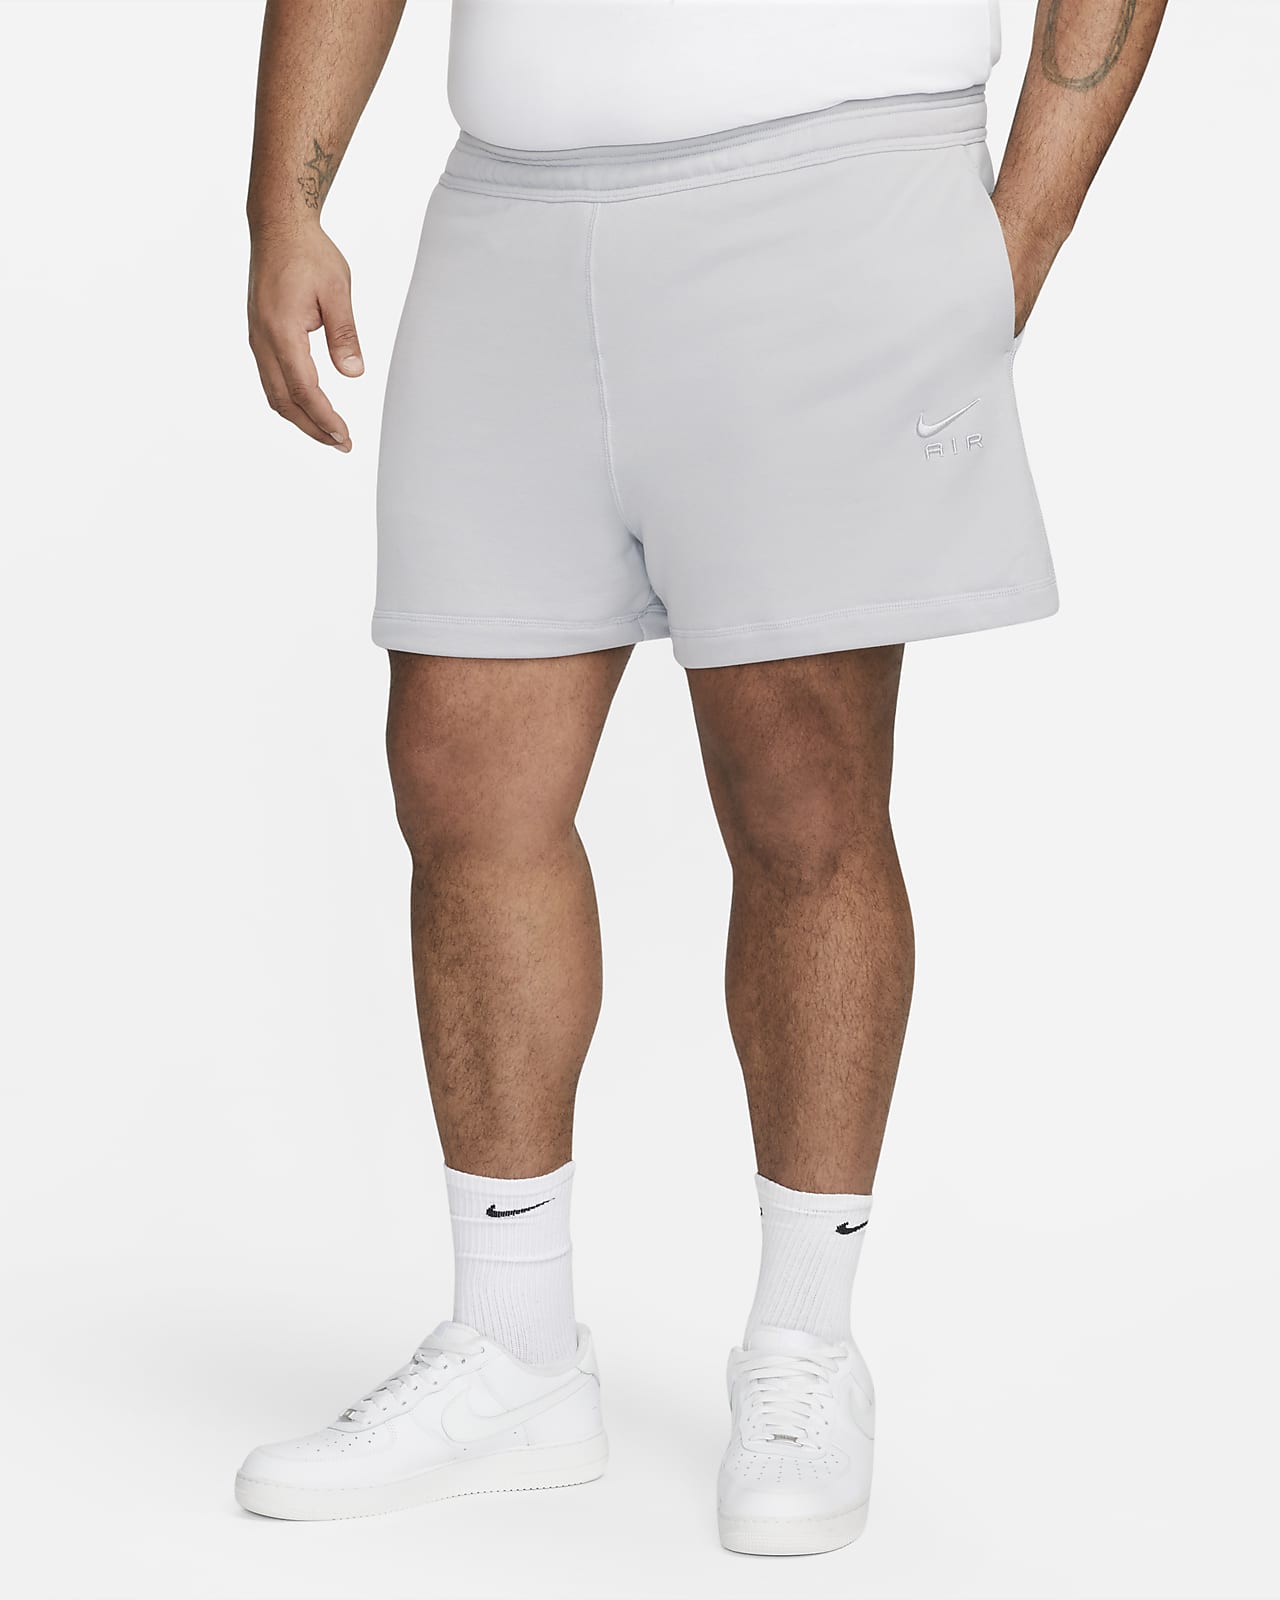 Nike Sportswear Air Men\'s Terry Shorts. French